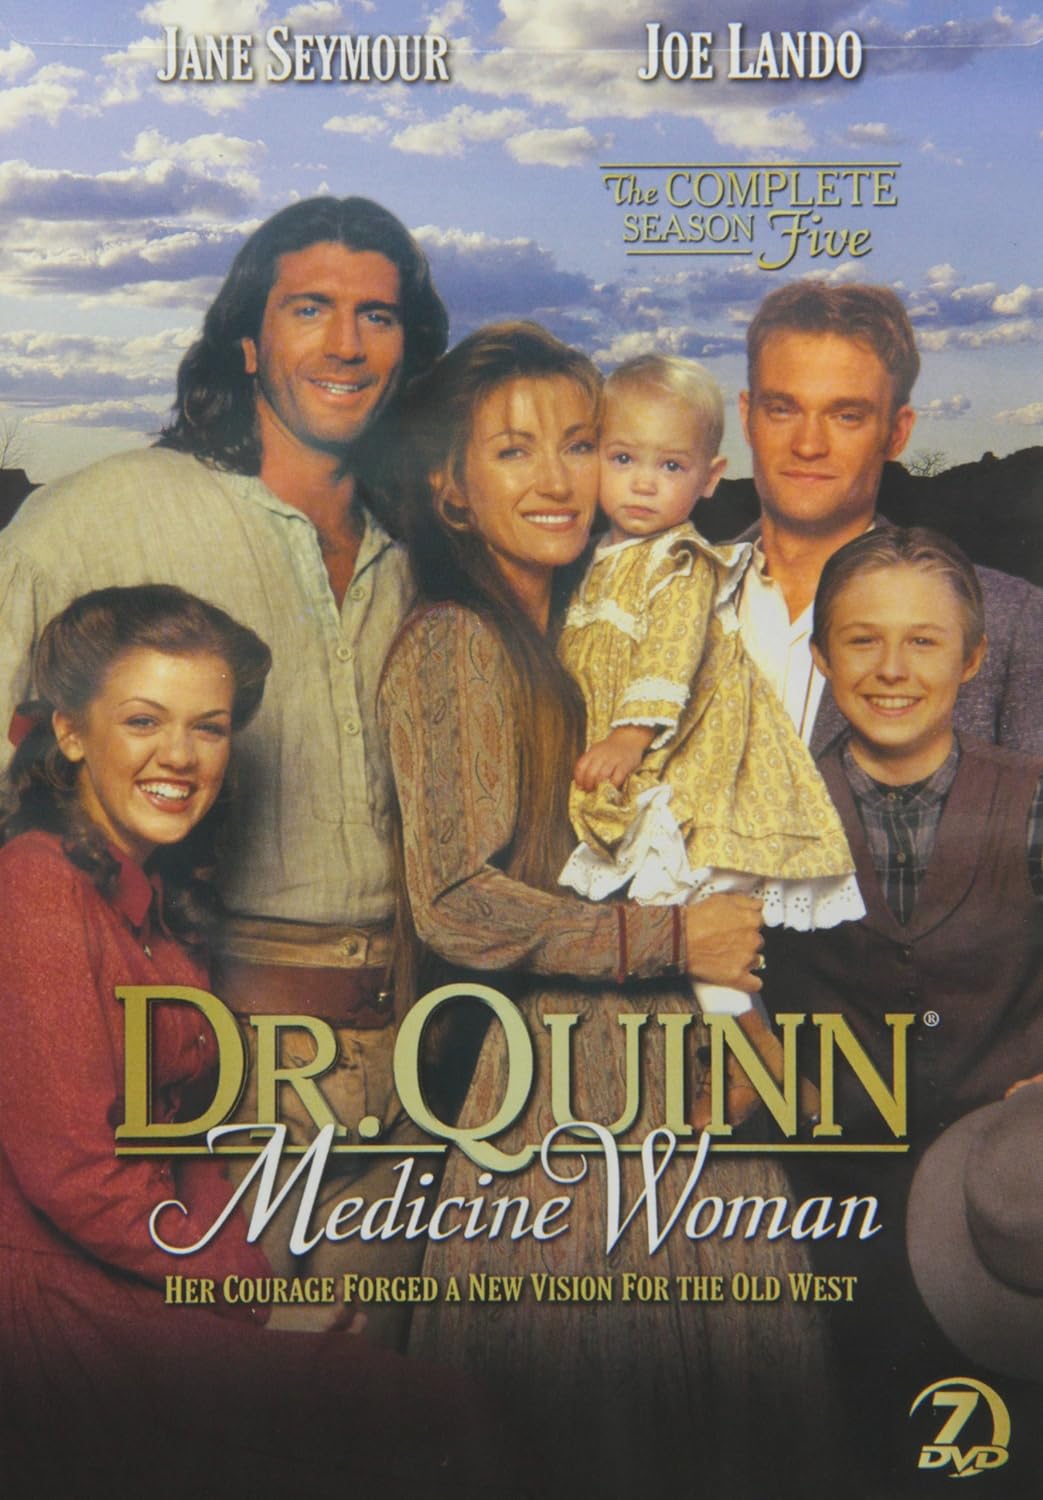 DR. QUINN MEDICINE WOMAN TV SERIES COMPLETE DVD BOX SET